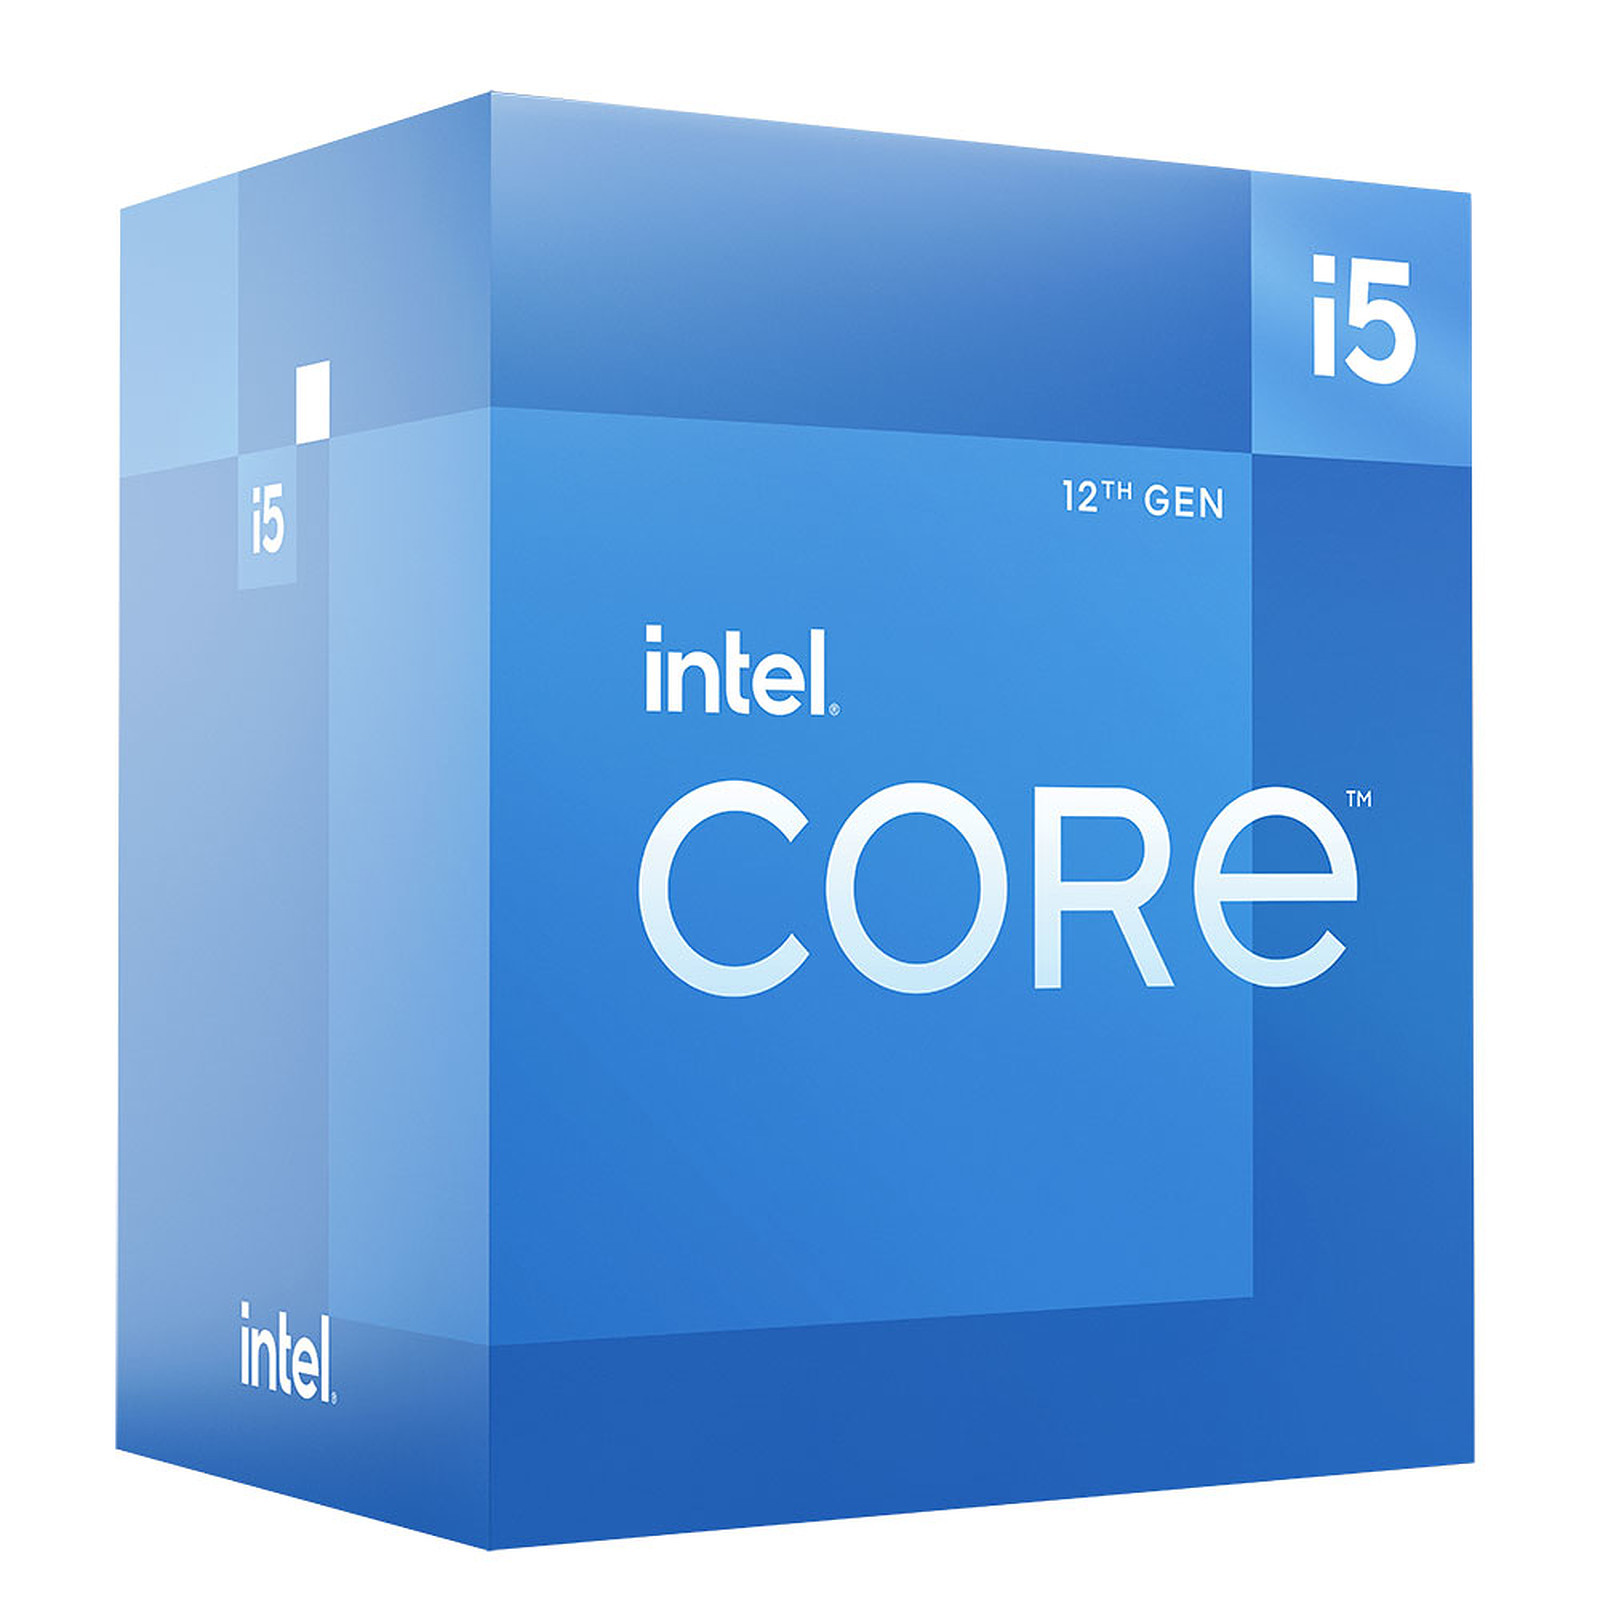 Imagen PC Core i5 12400, Ram 8gb, Solido 250, Fuente Real 550, Chasis 4 Fan RGB 2